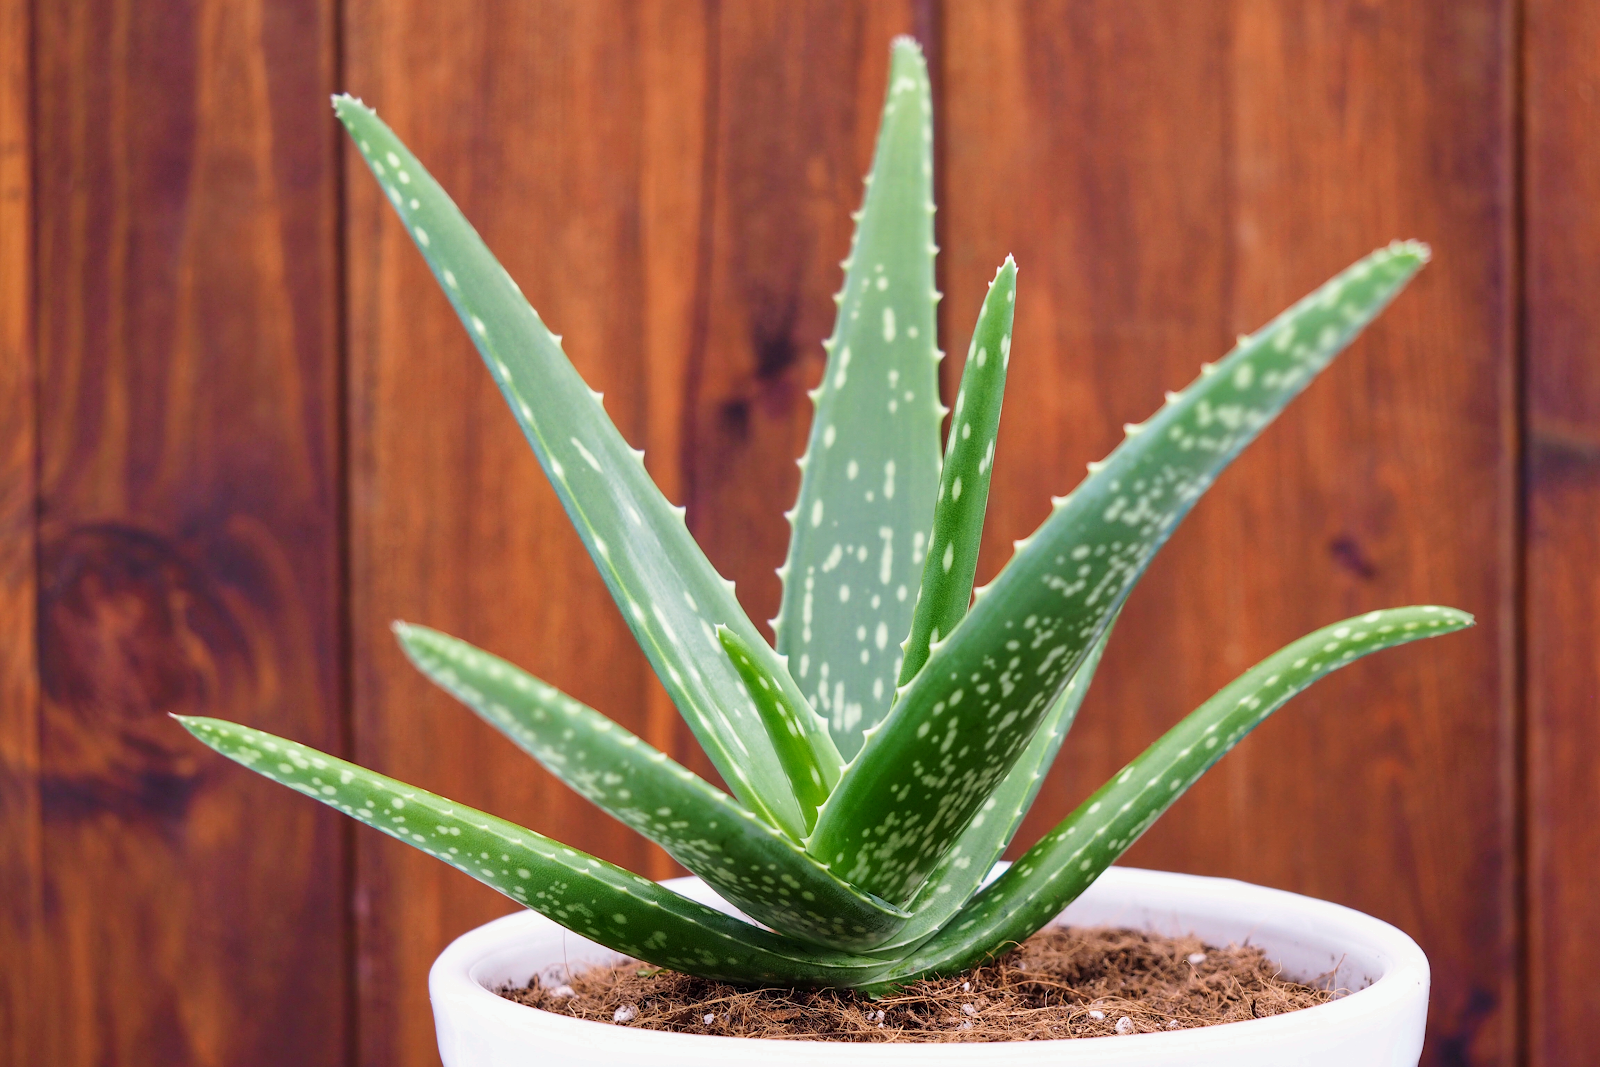 Aloe instead of lubricant